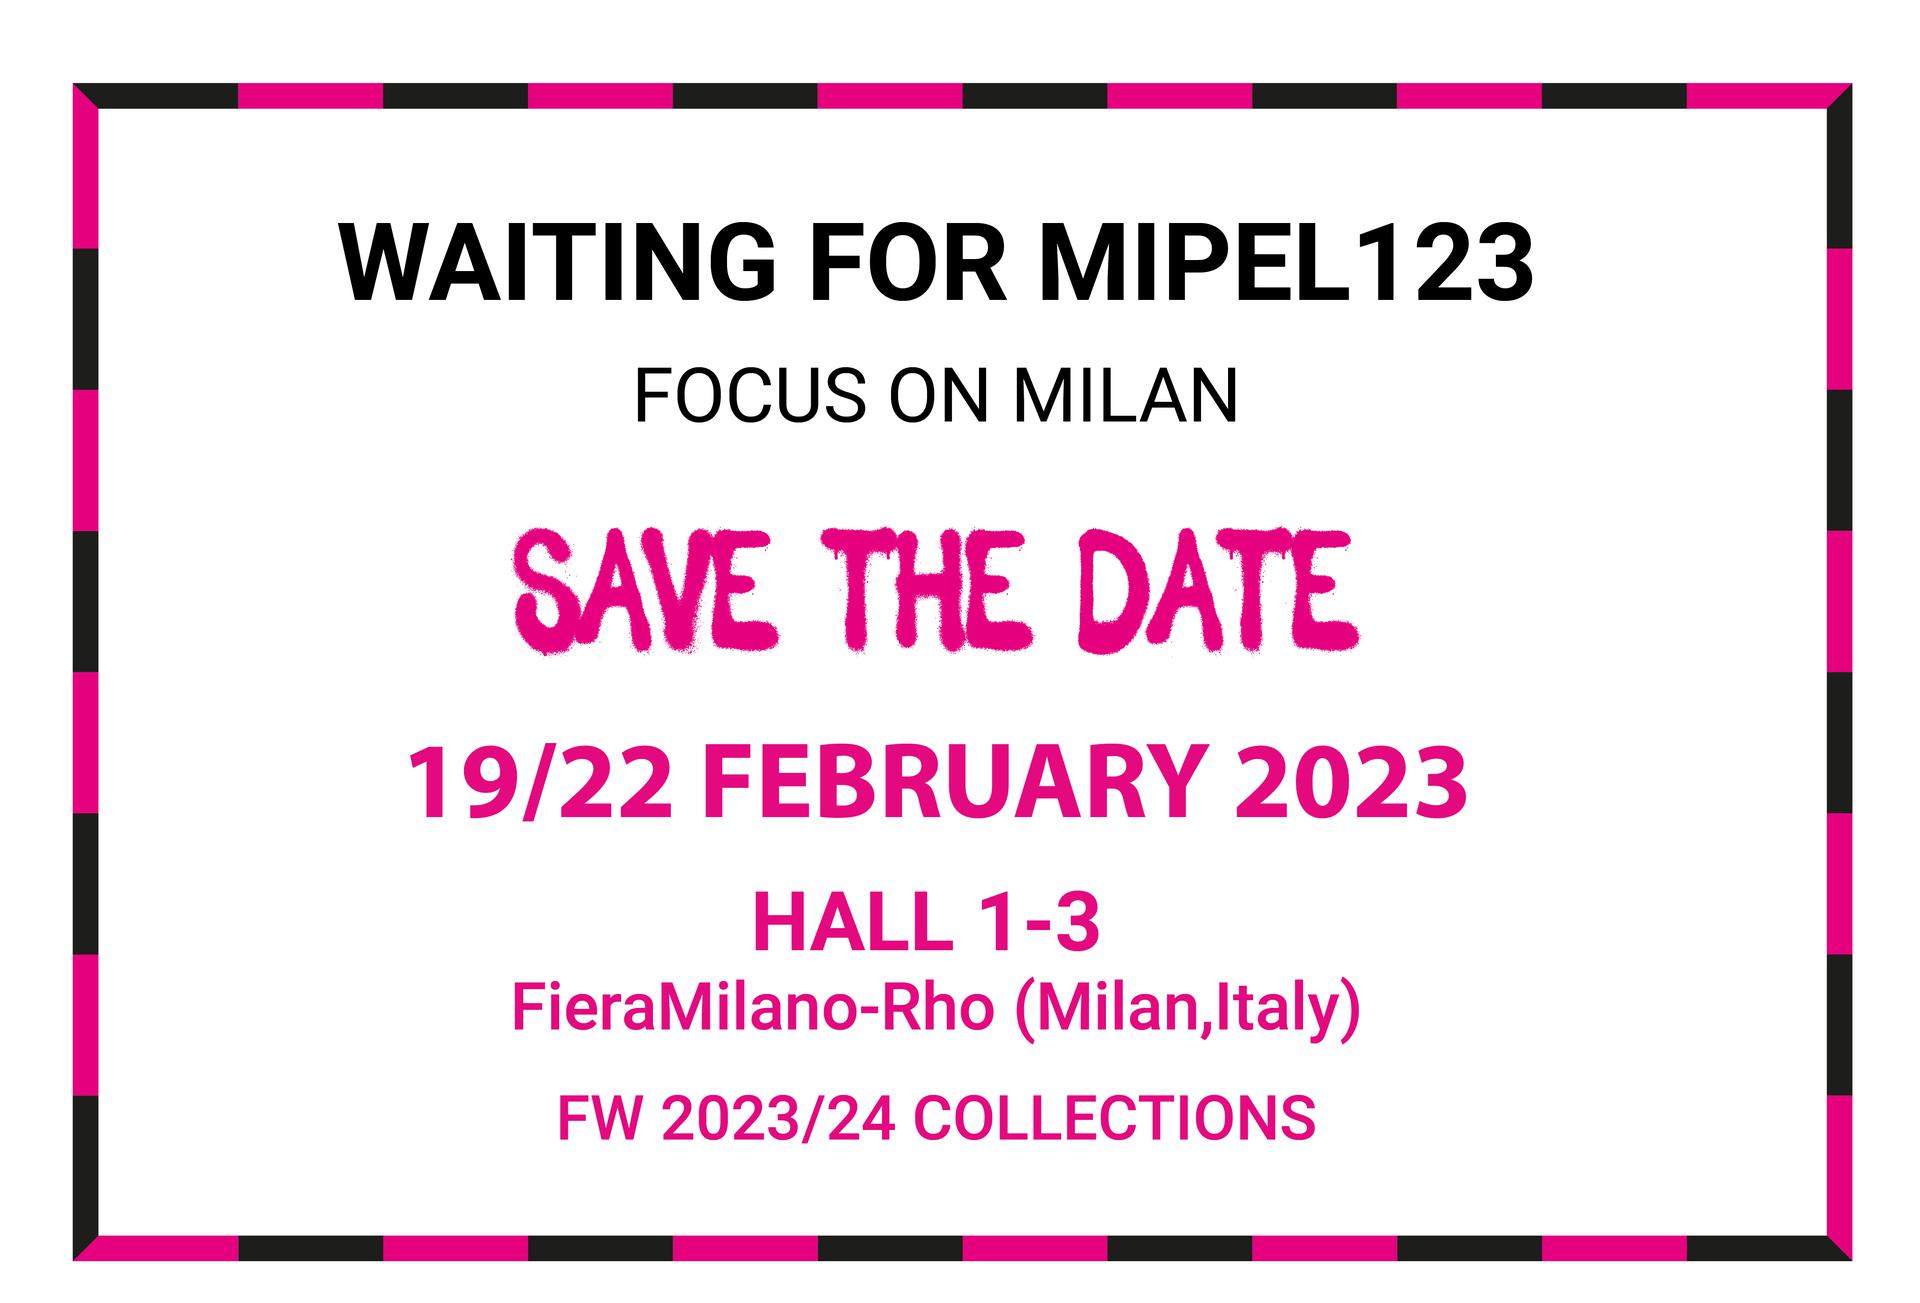 MIPEL123: 19/22 FEBRUARY 2023 - FIERAMILANO  RHO - FW 2023/24 COLLECTIONS